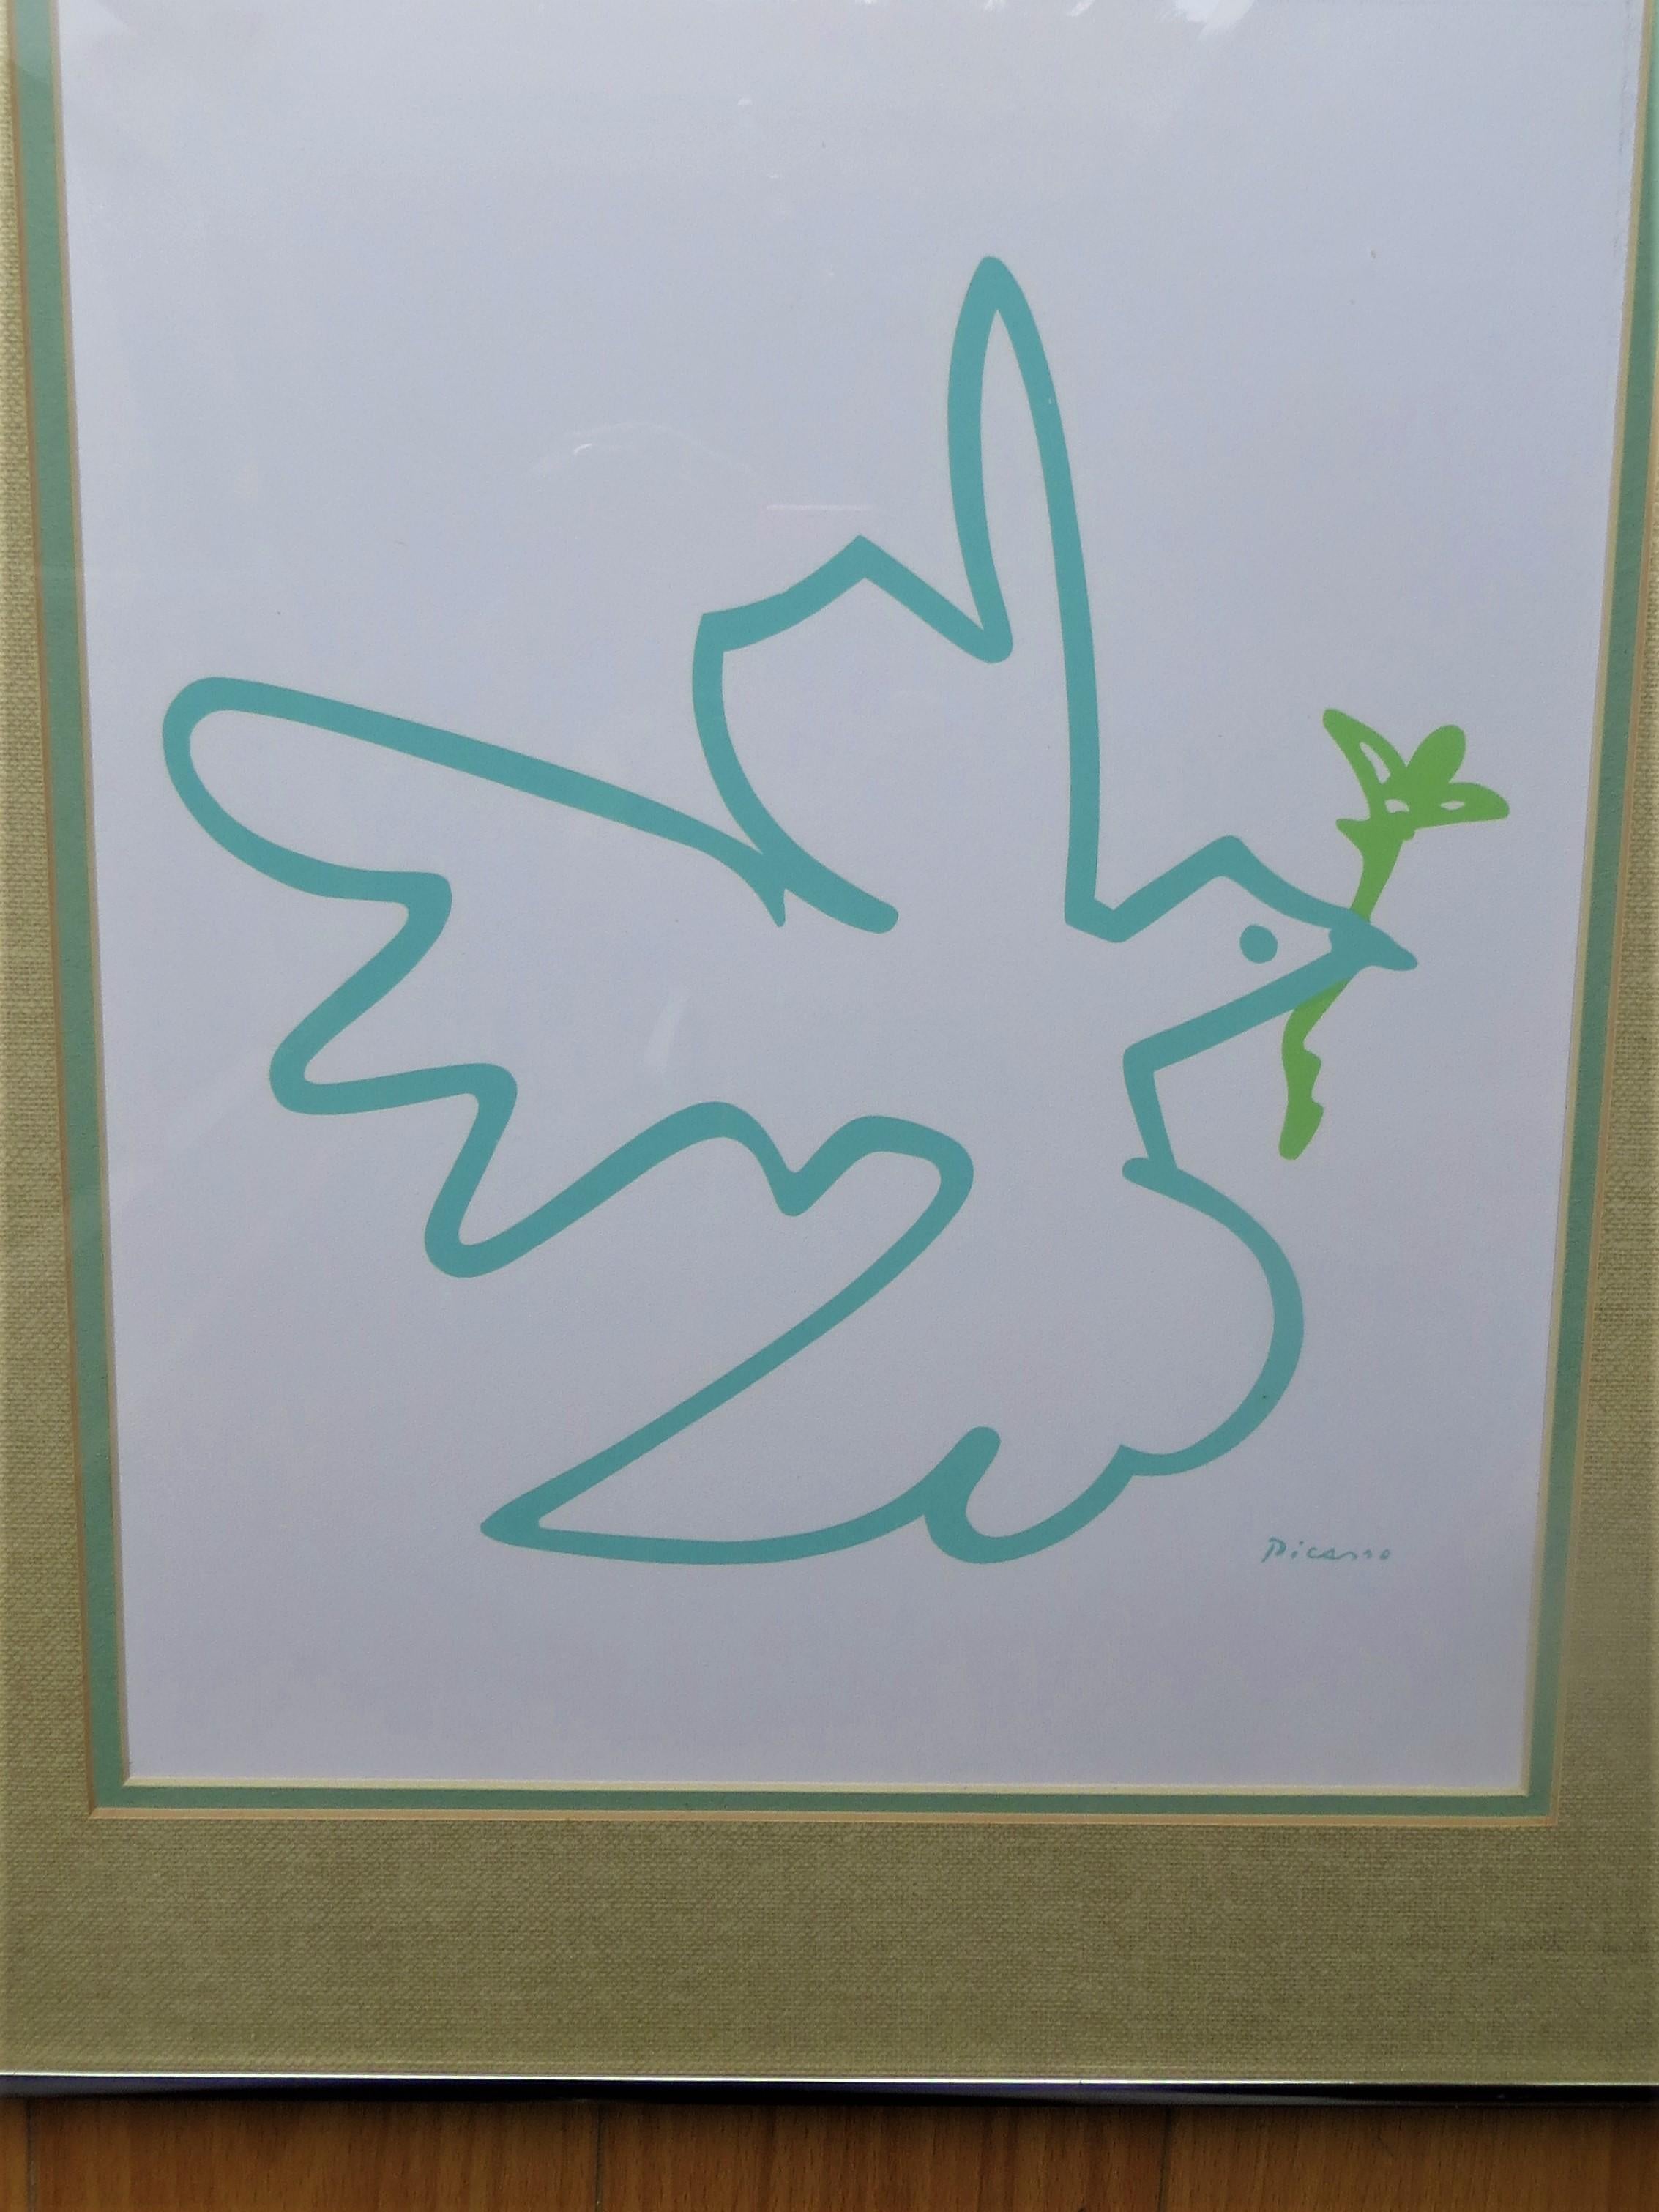  After Pablo Picasso - Peace Dove 1 - Lithograph 3